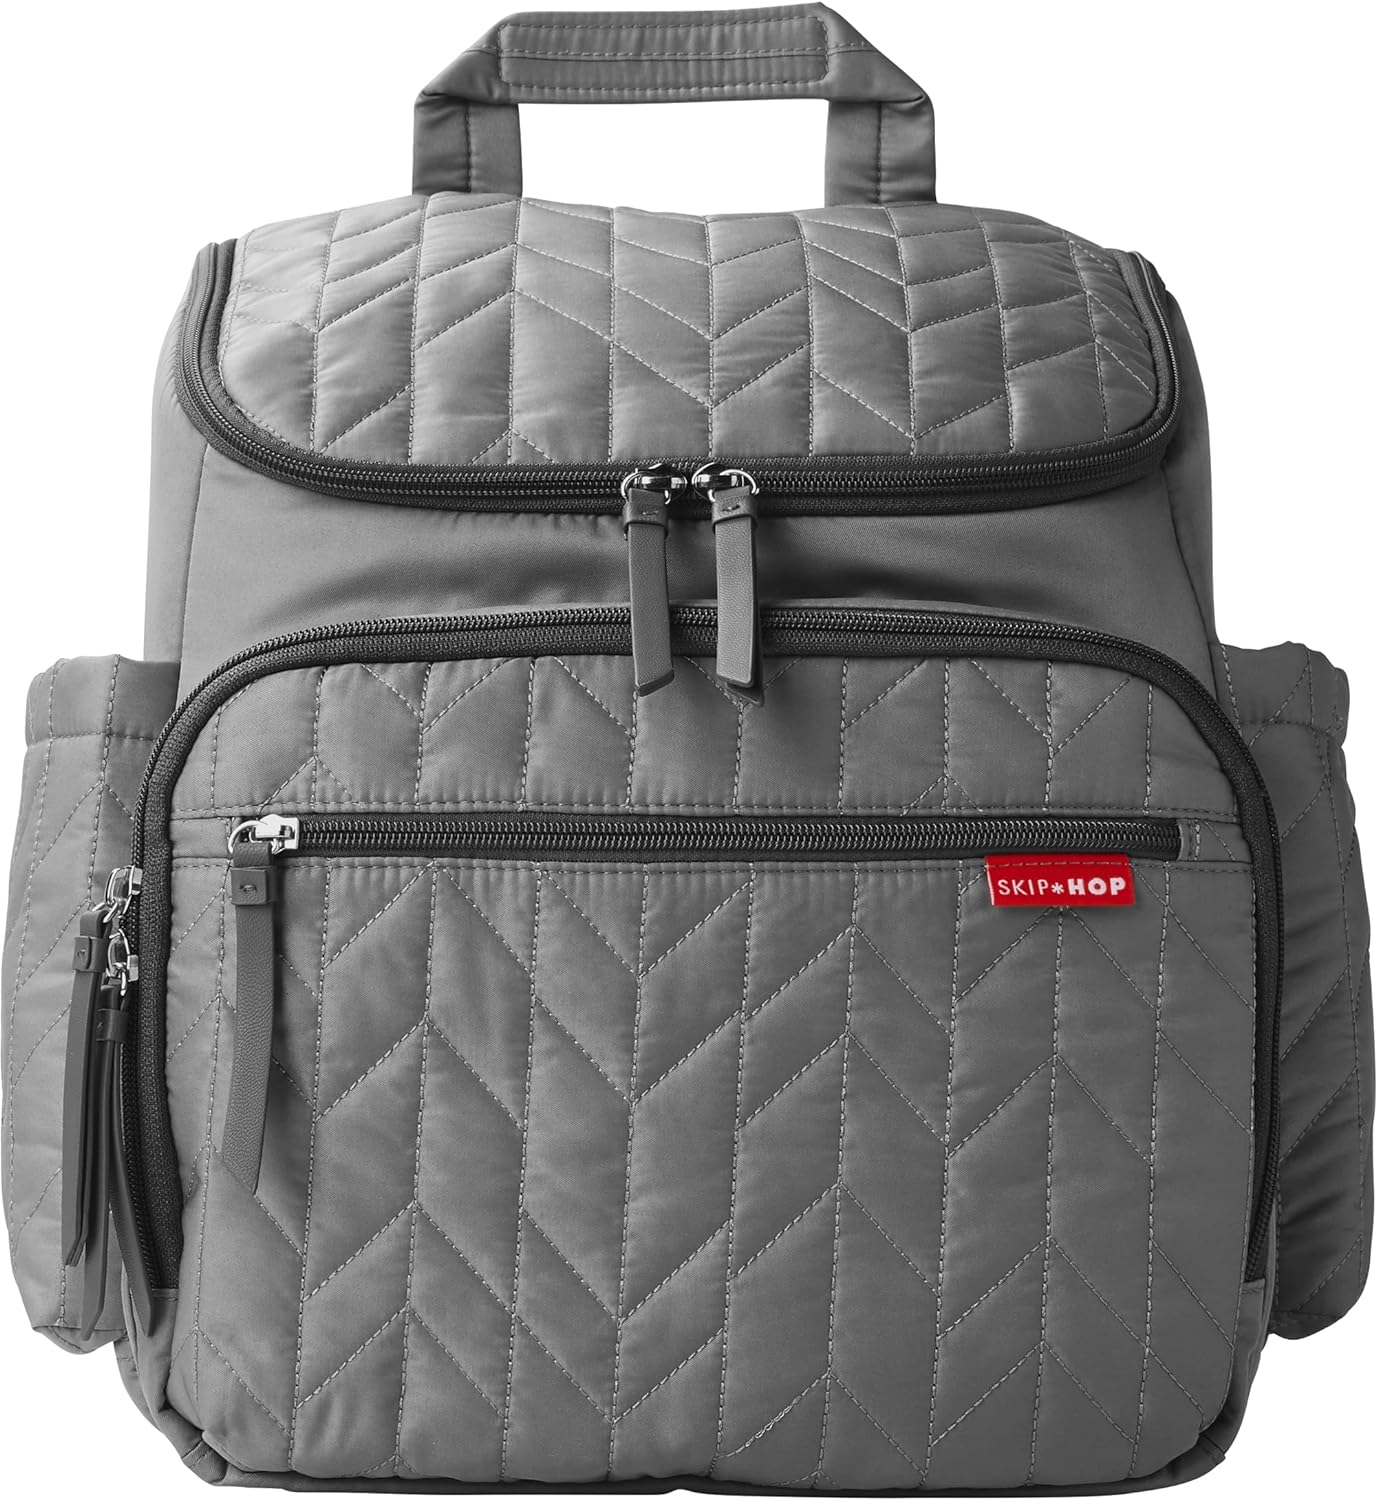 Skip Hop Diaper Bag Backpack: Forma, Multi-Function Baby Travel Bag